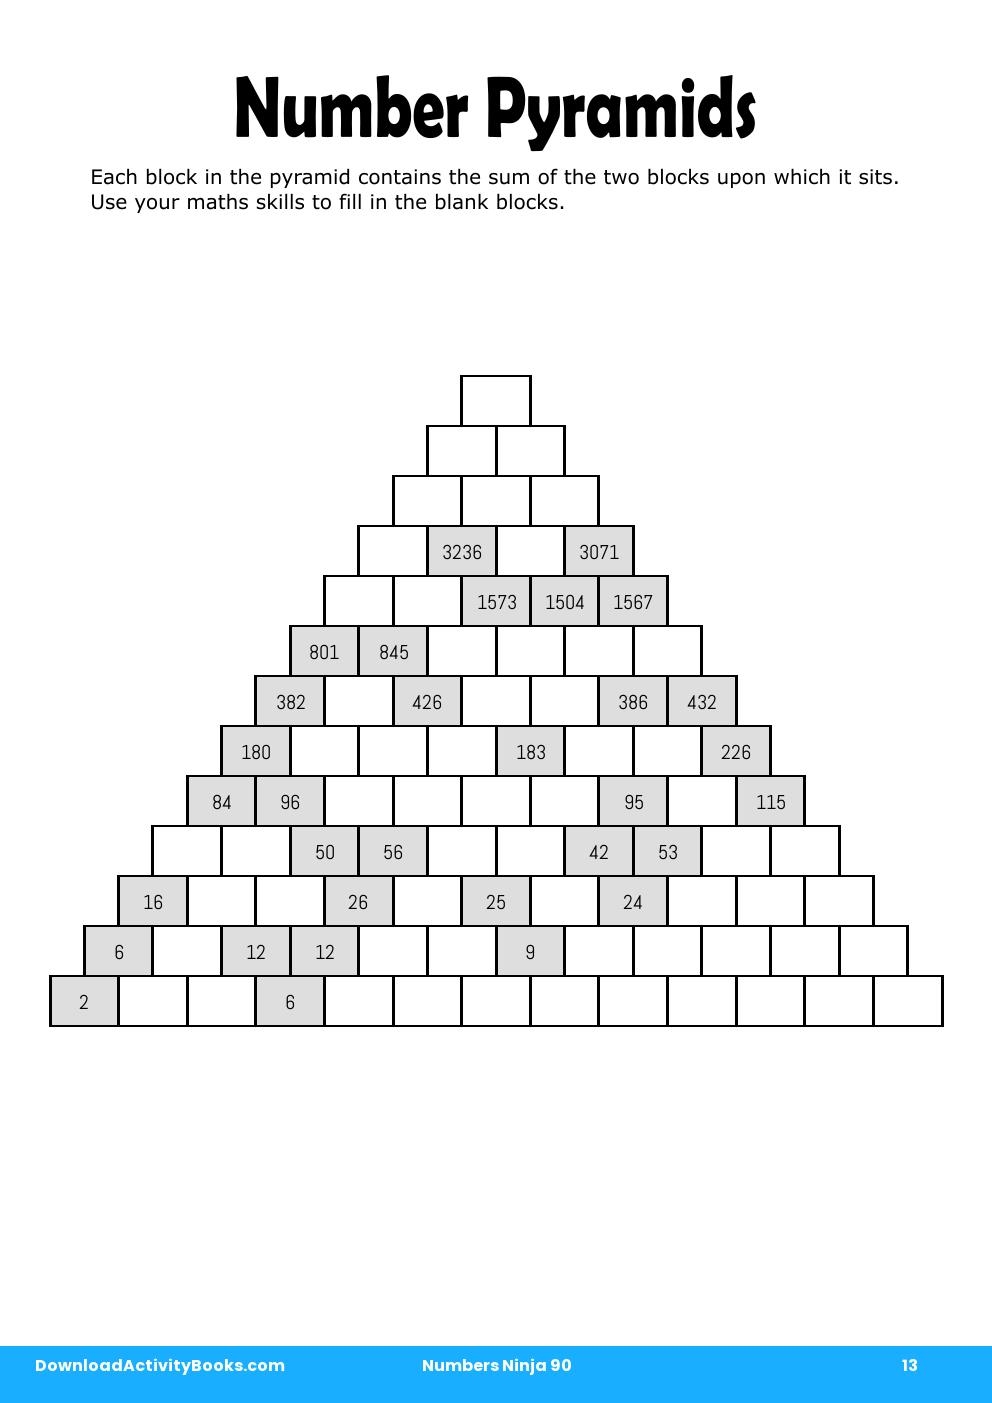 Number Pyramids in Numbers Ninja 90